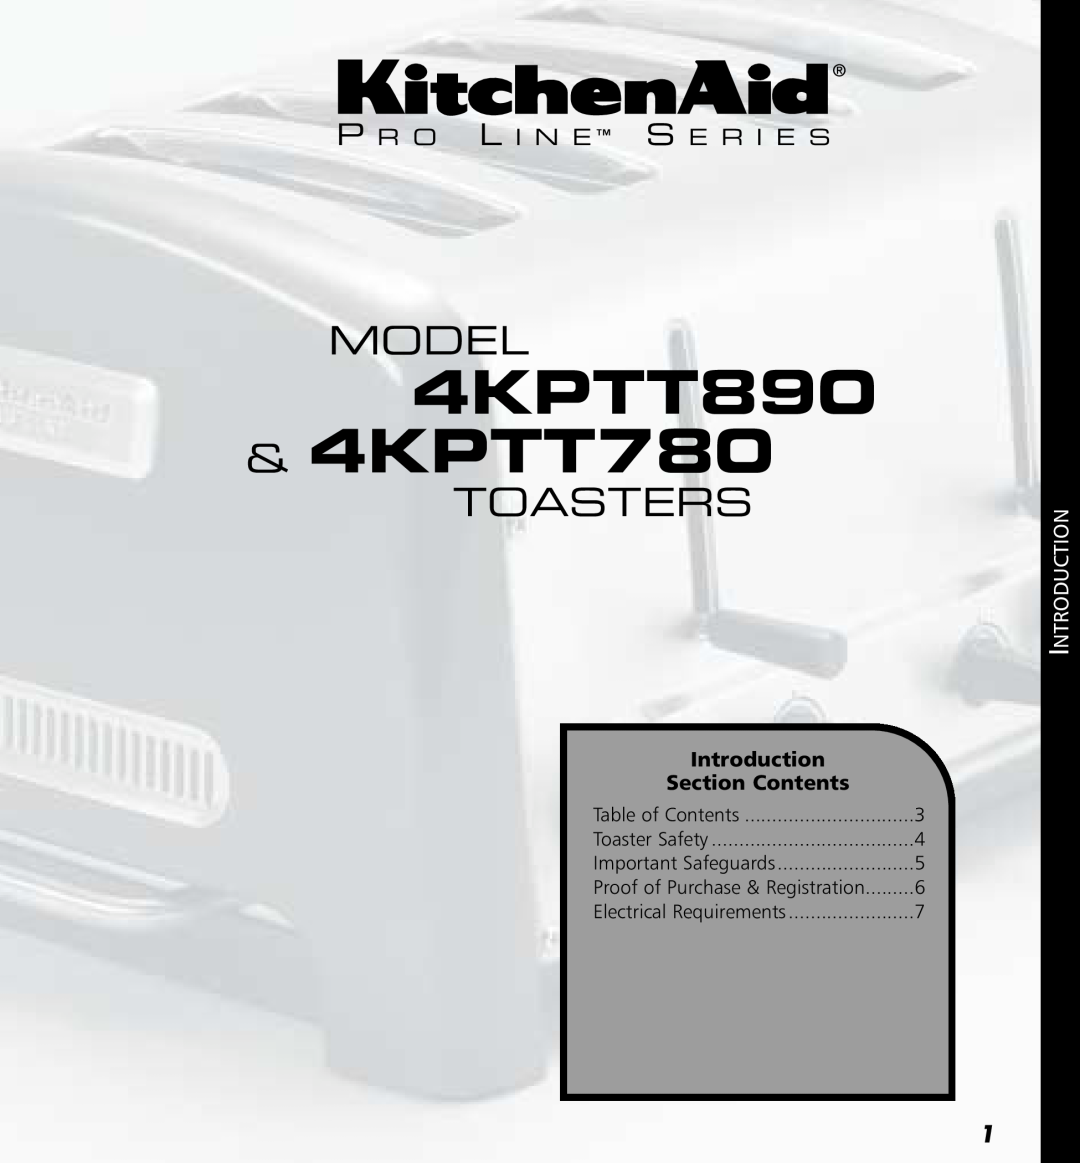 KitchenAid manual 4KPTT890 &4KPTT780, Model, Toasters, P R O L I N E S E R I E S, Introduction, Section Contents 